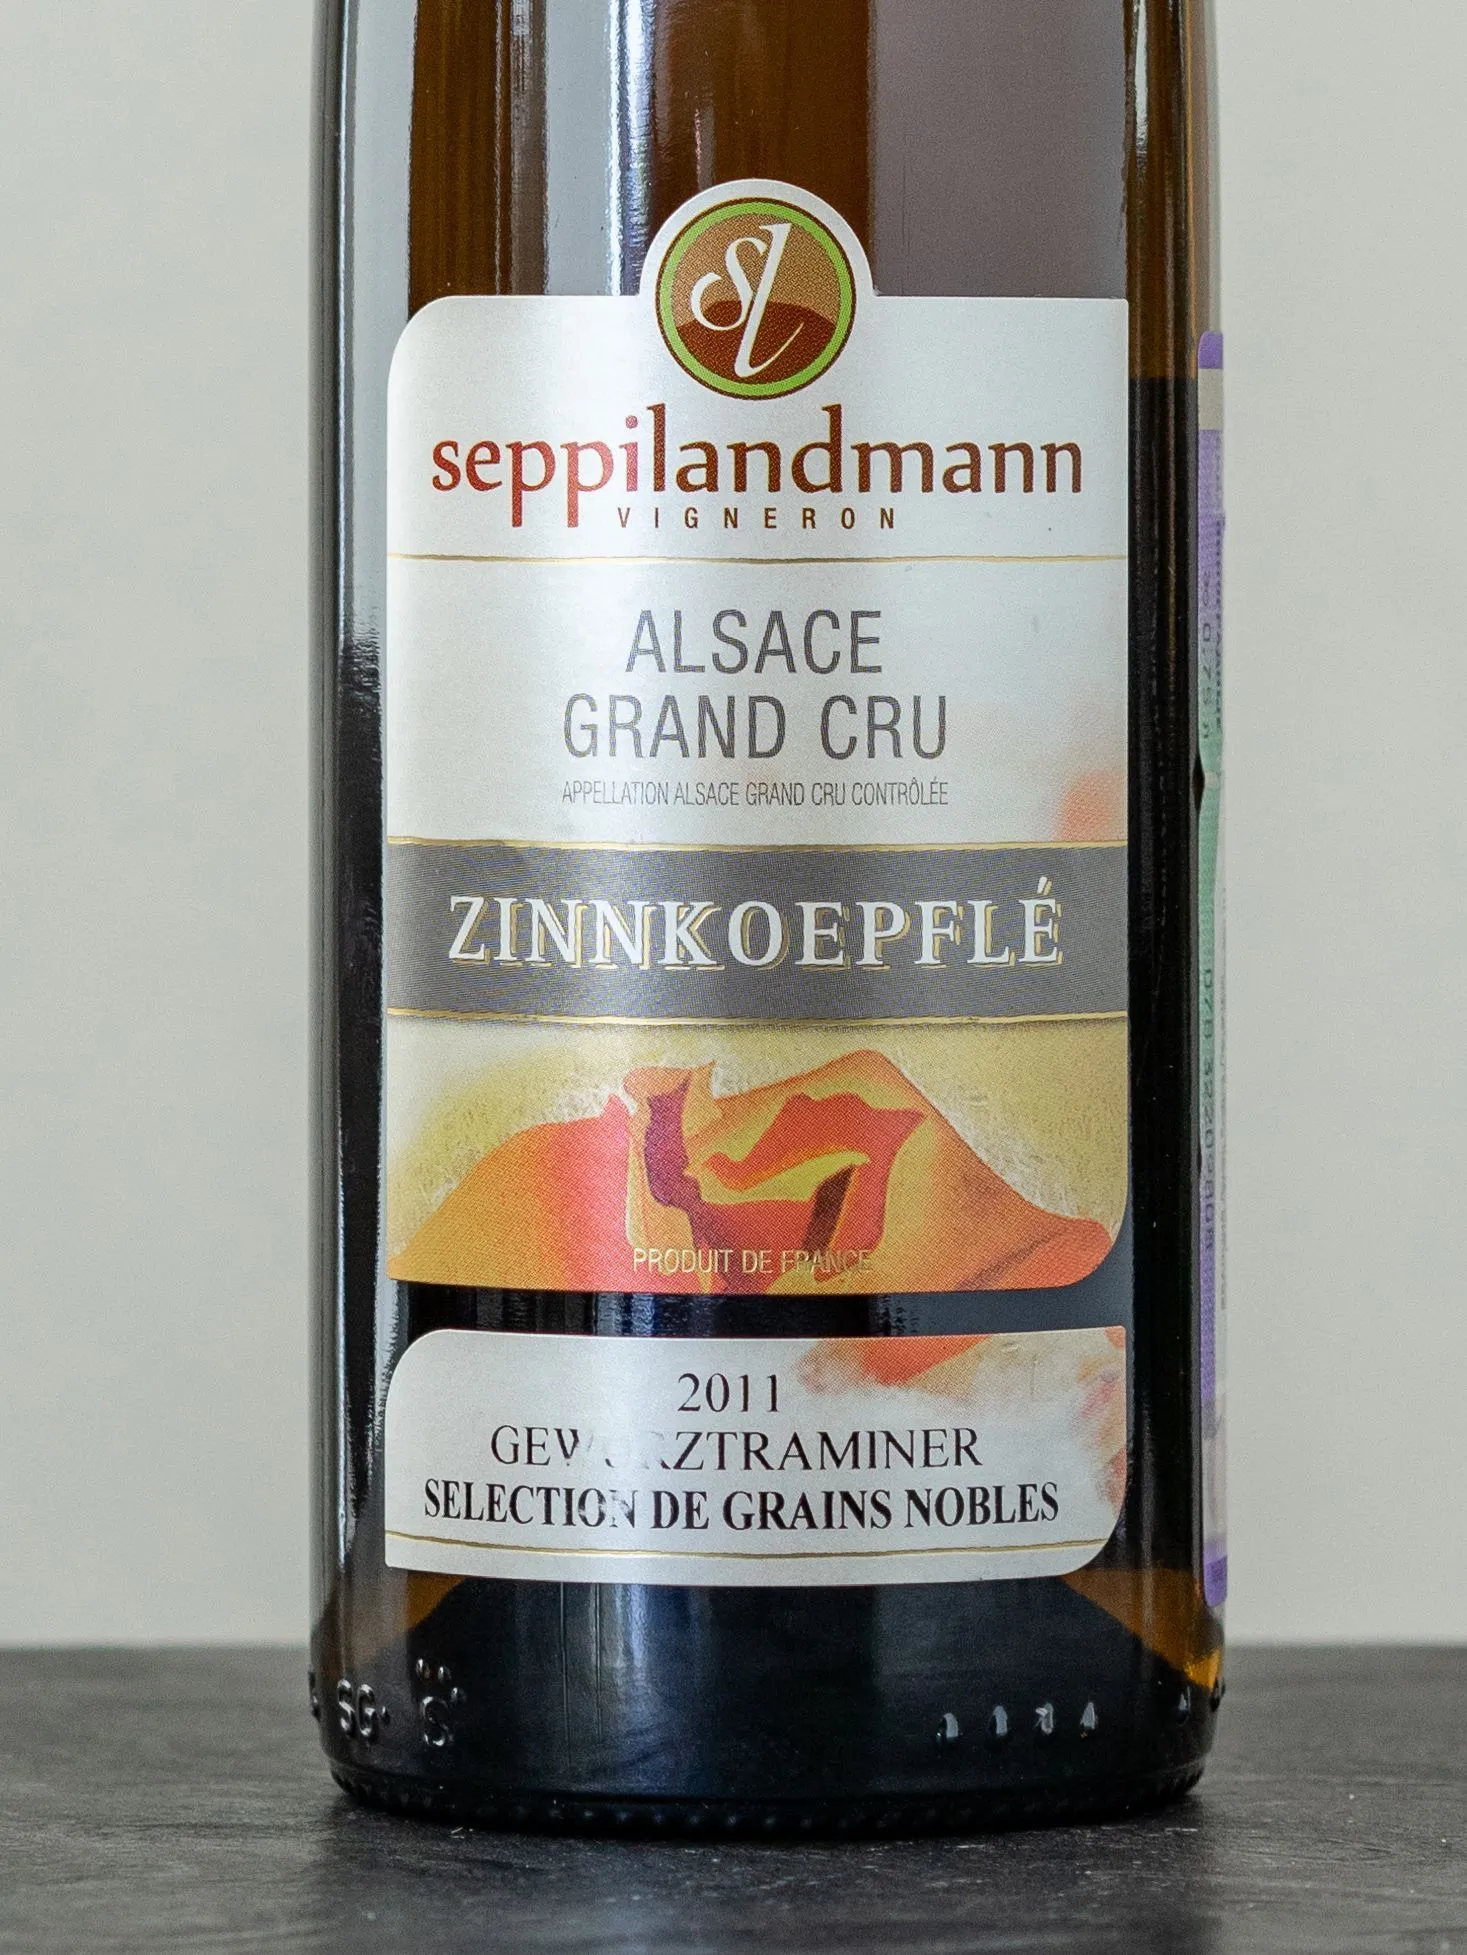 Вино Seppi Landmann Zinnkoepfle Gewurztraminer Selection de Grains Nobles Alsace / Сеппи Ландманн Цинкопфле Гевюрцтраминер Селексьон де Грэн Нобль